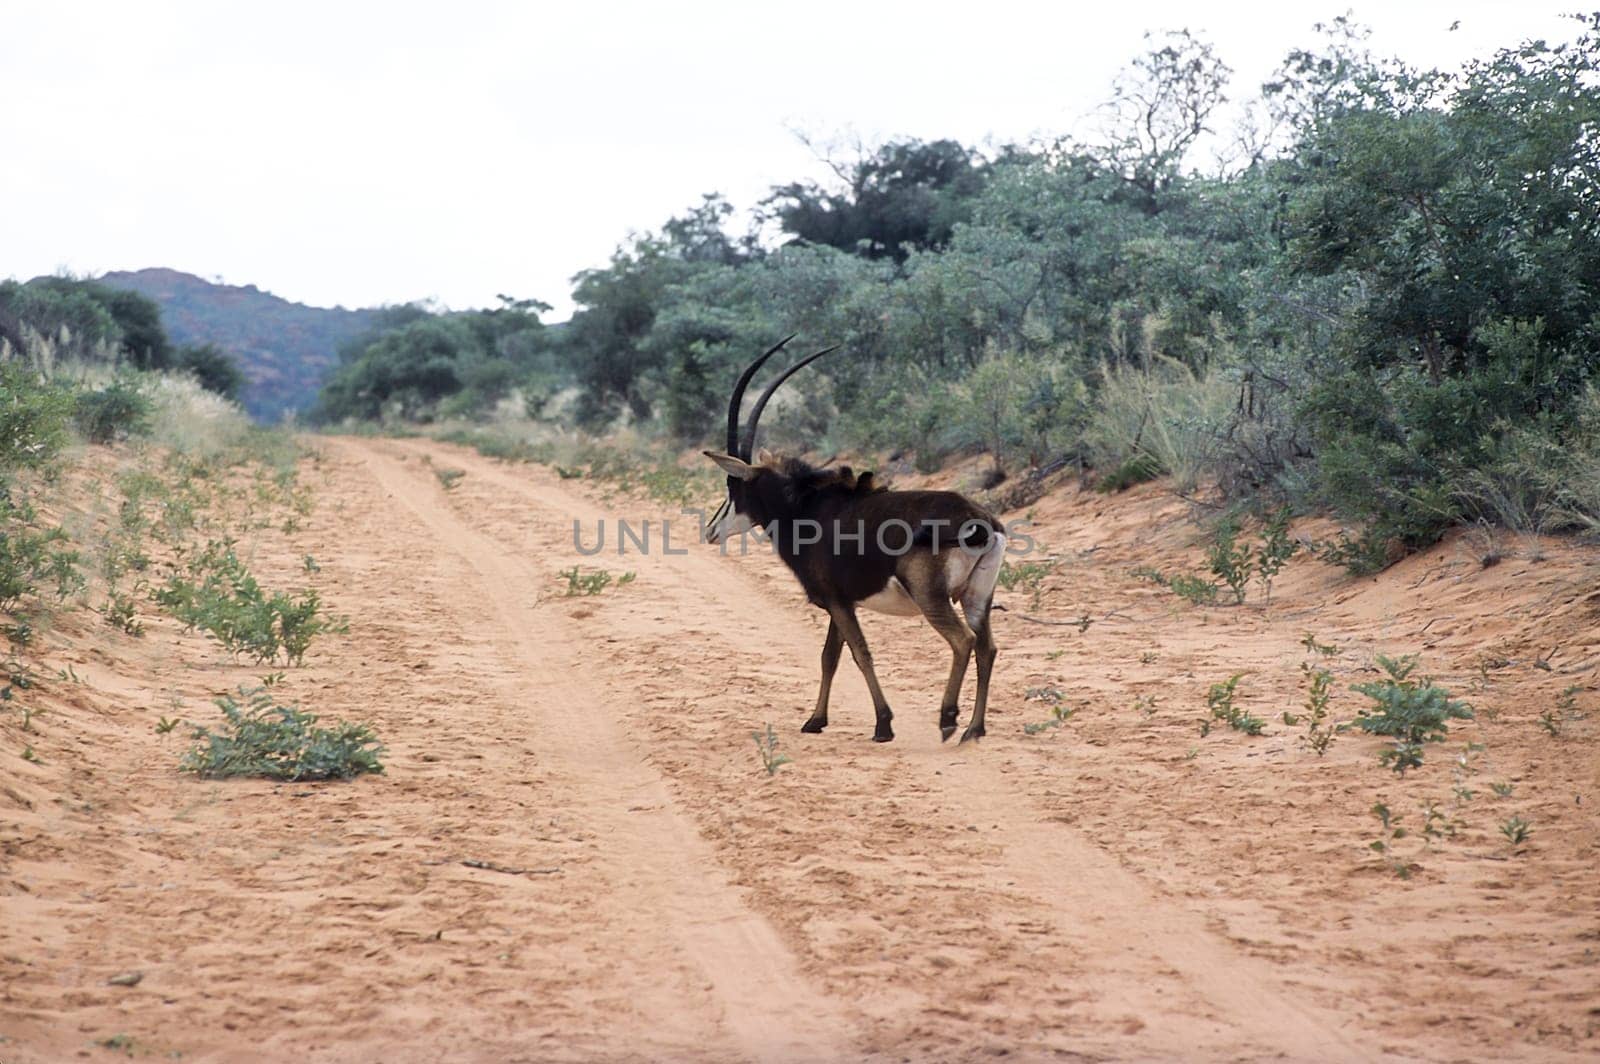 Sable Antelope, (Hippotragus niger), Africa, Namibia, Otjozondjupa, Waterberg Plateau Park